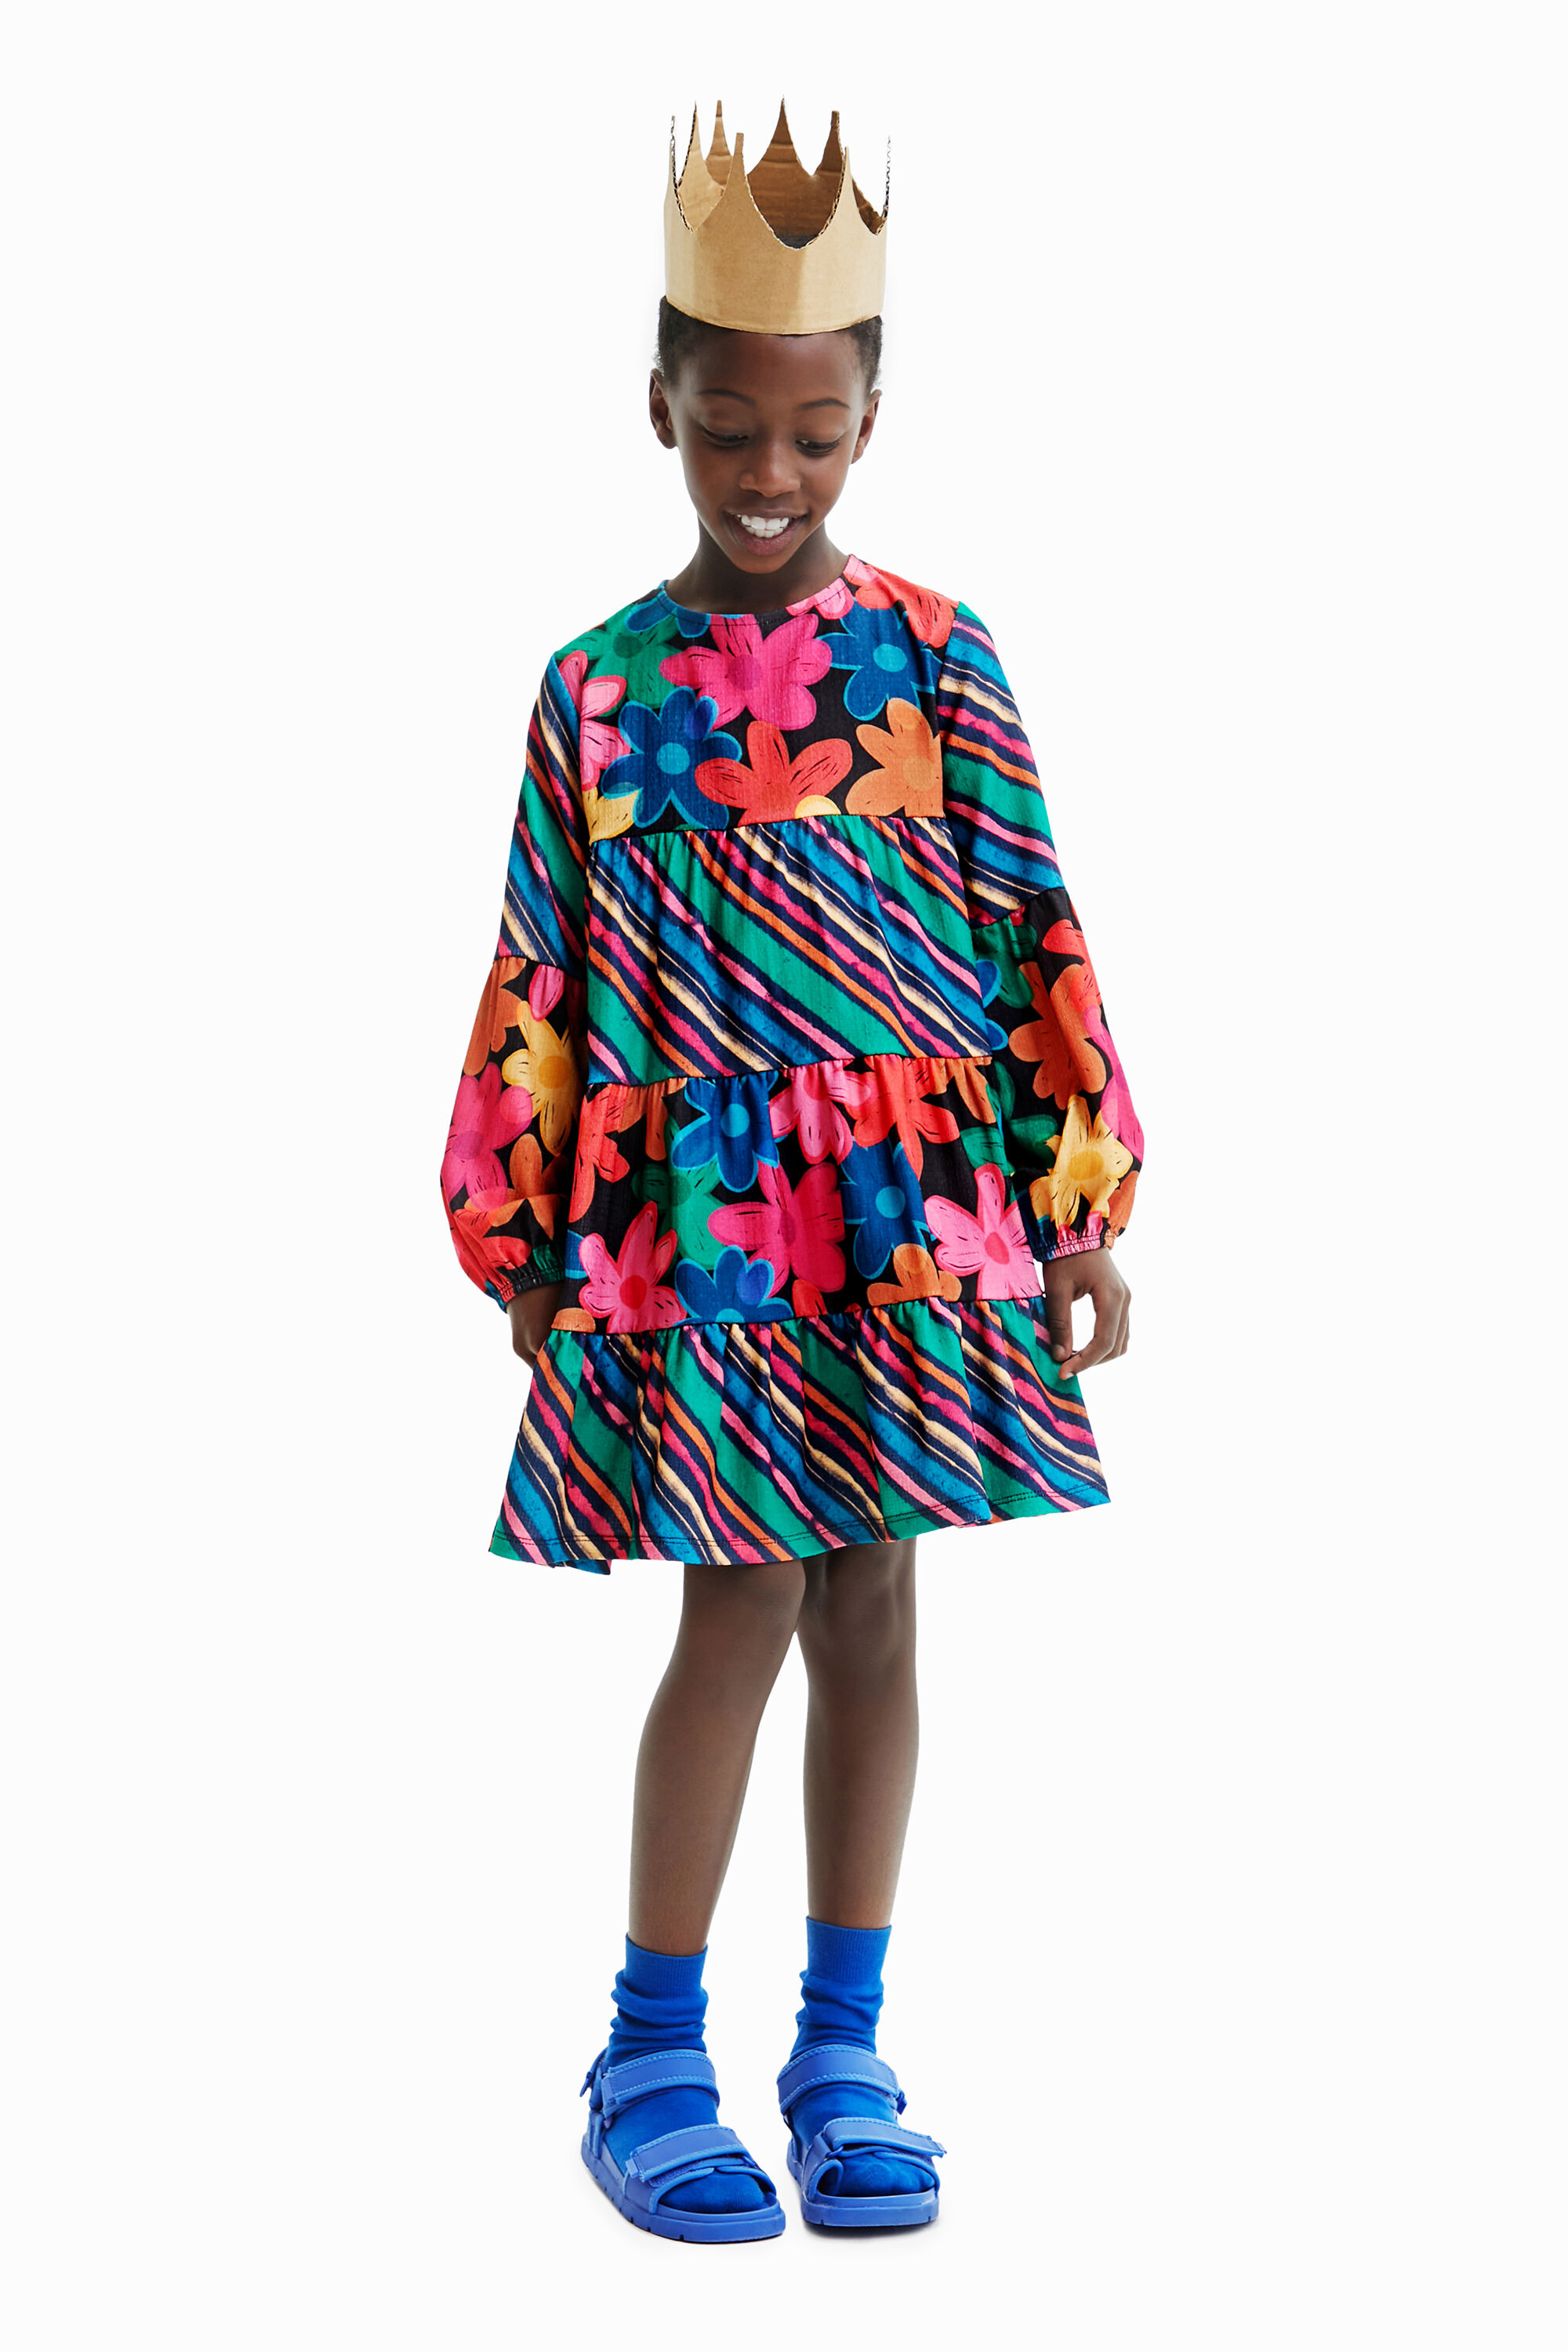 Robe DESIGUAL 13-14 ans multicouleur Robes  Desigual Enfant Enfant Fille Desigual Vêtements Desigual Enfant Robes  Desigual Enfant 